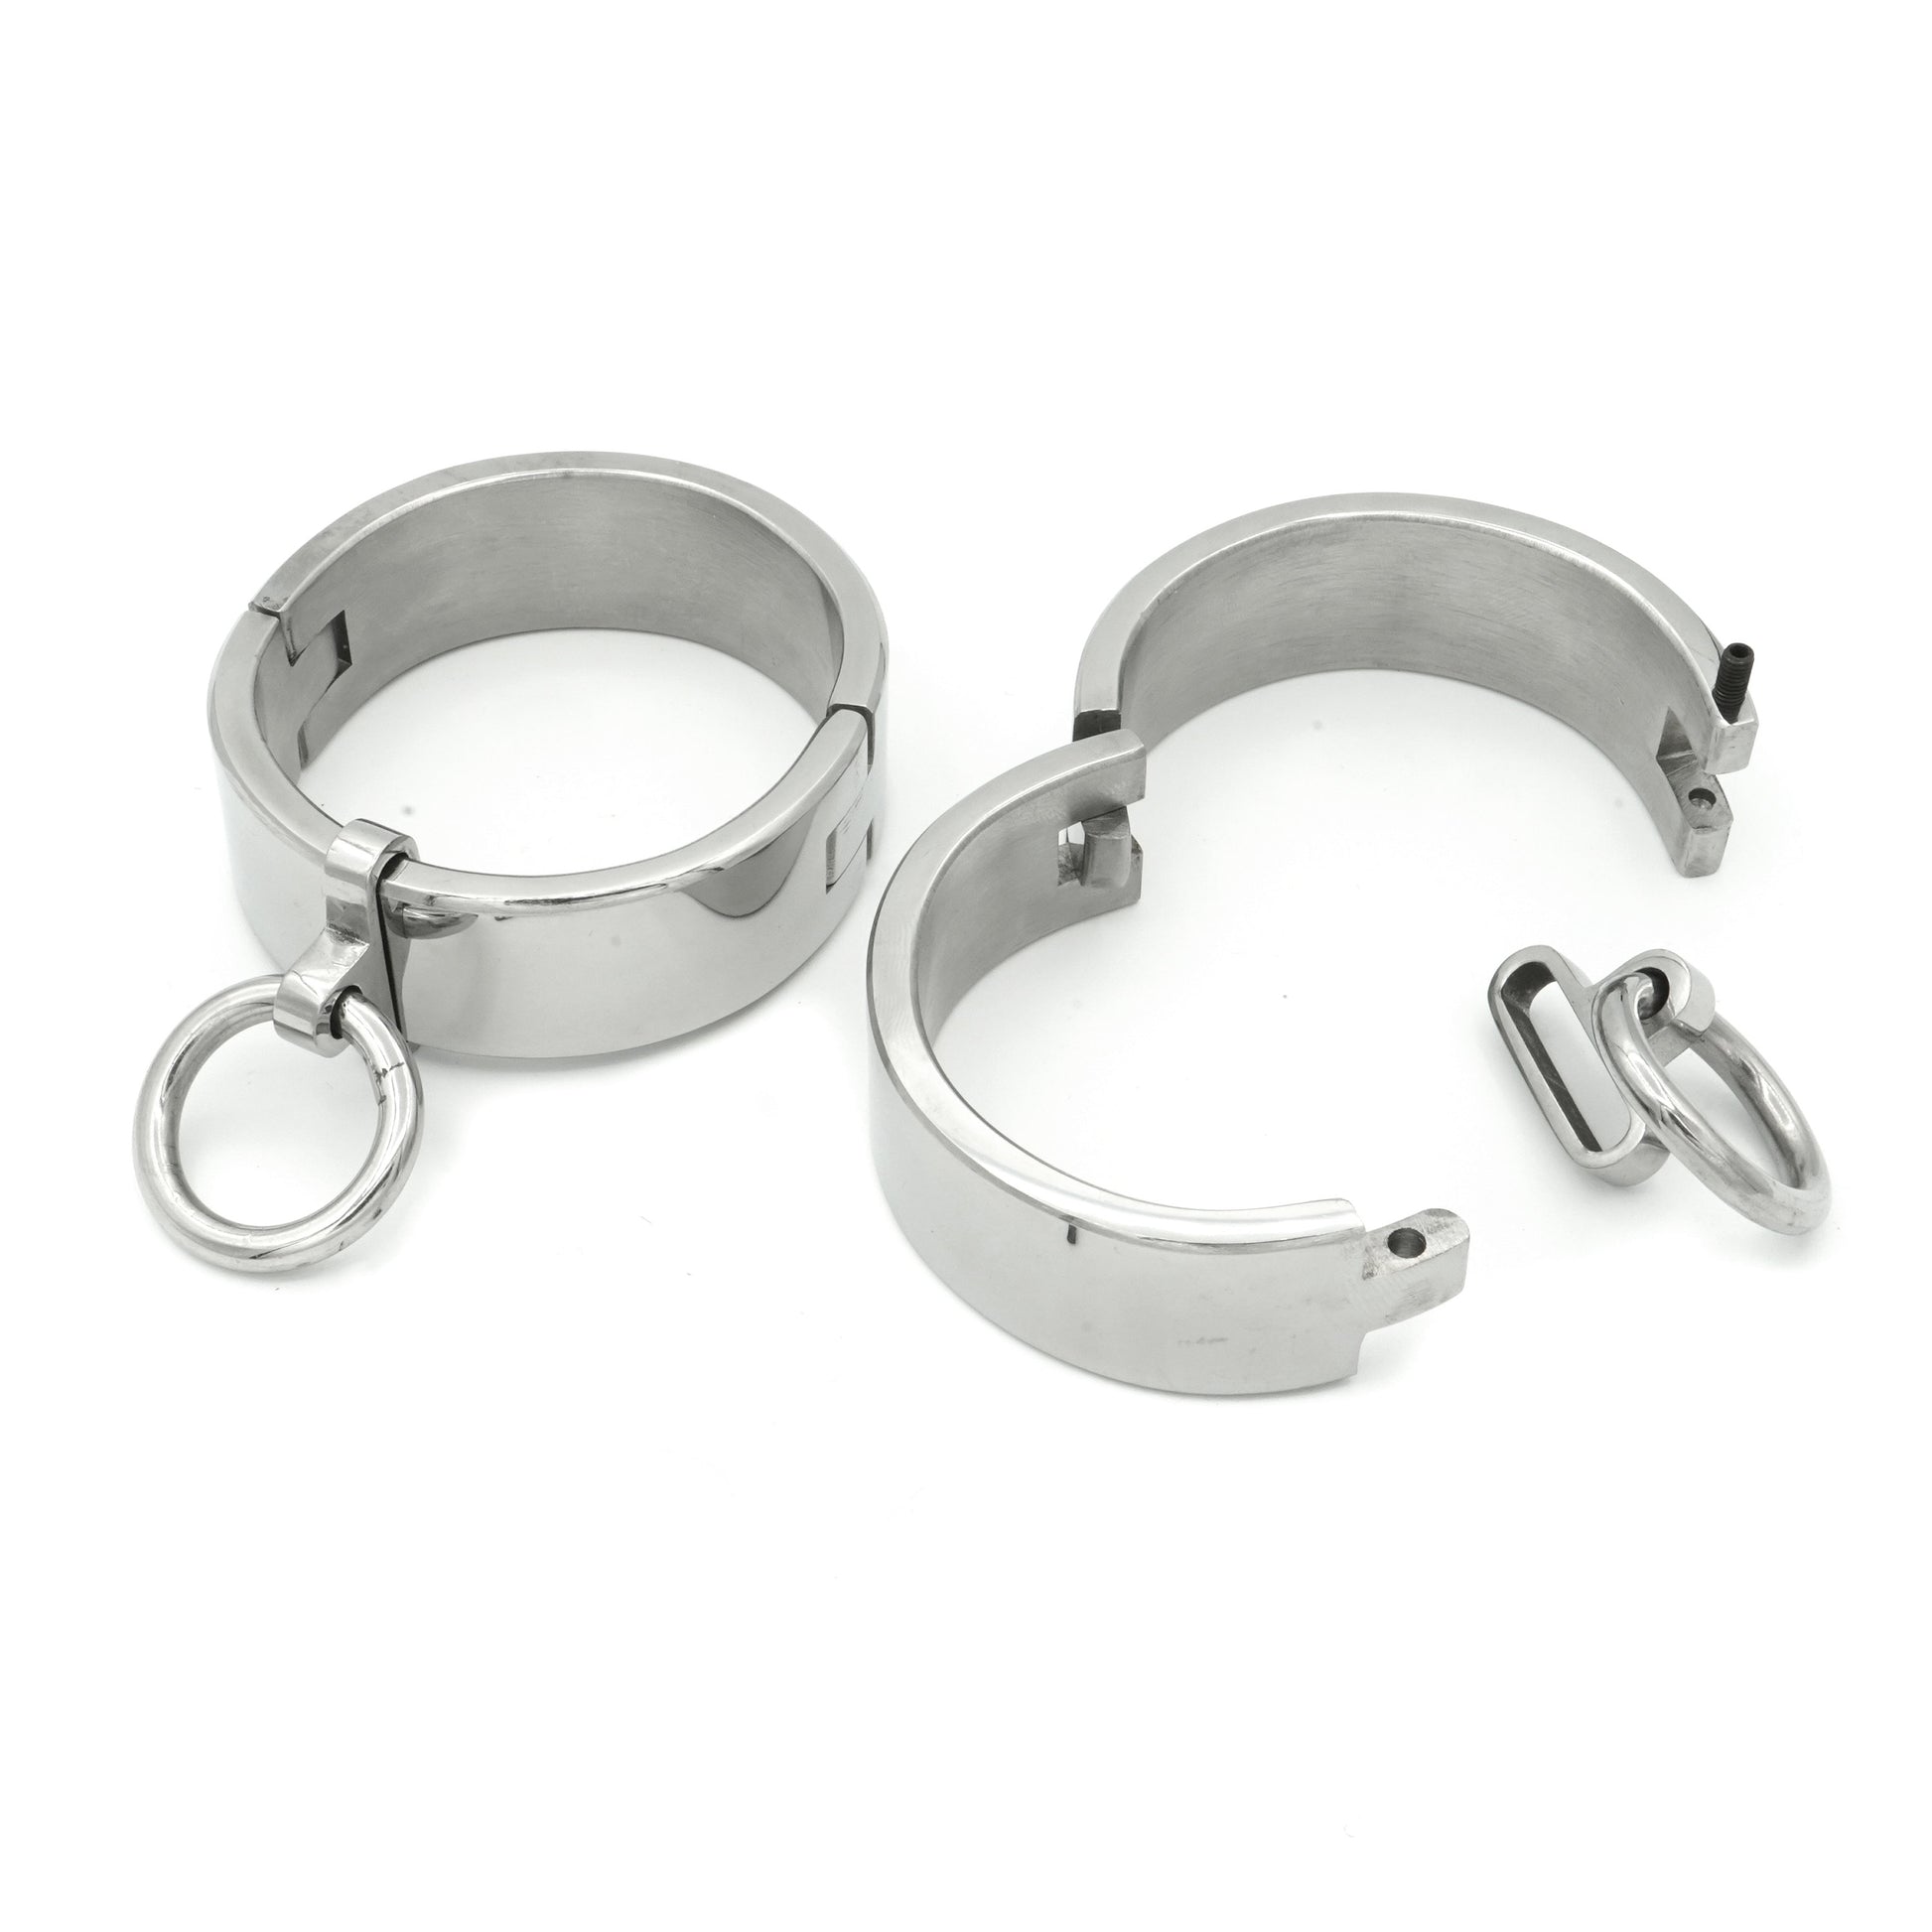 Massive Stainless Steel cuffs locking bracelets